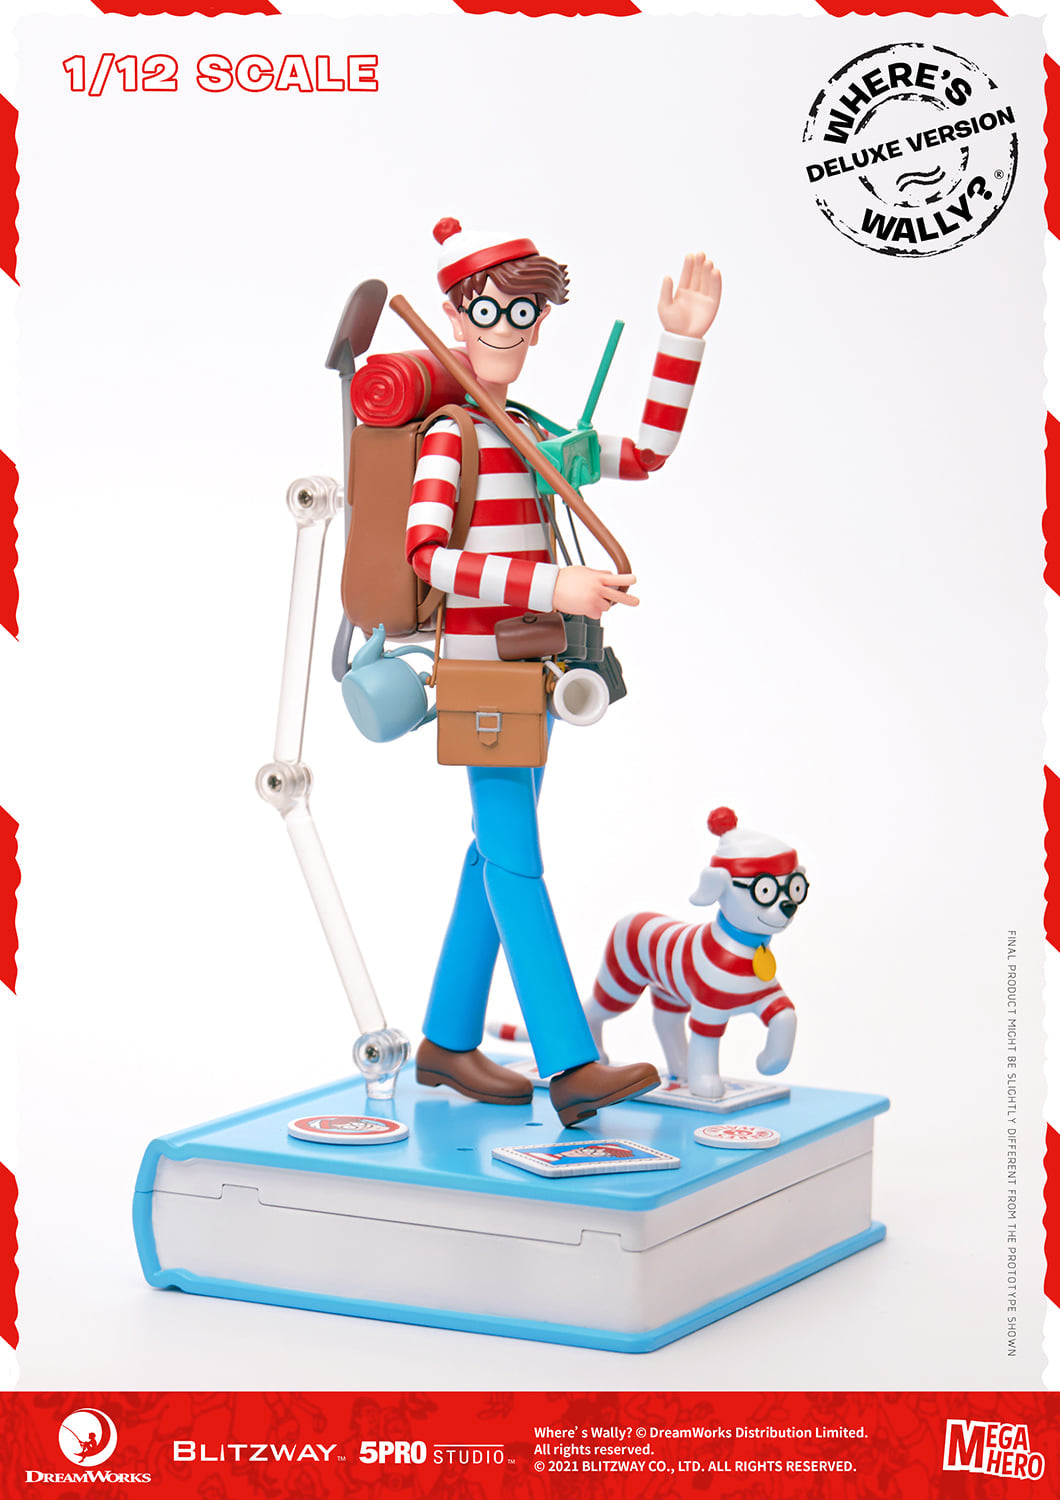 Pedido Figura Waldo (Deluxe version) - Where´s Waldo? marca Blitzway 5PRO-MG-20303 escala pequeña 1/12 (18 cm)